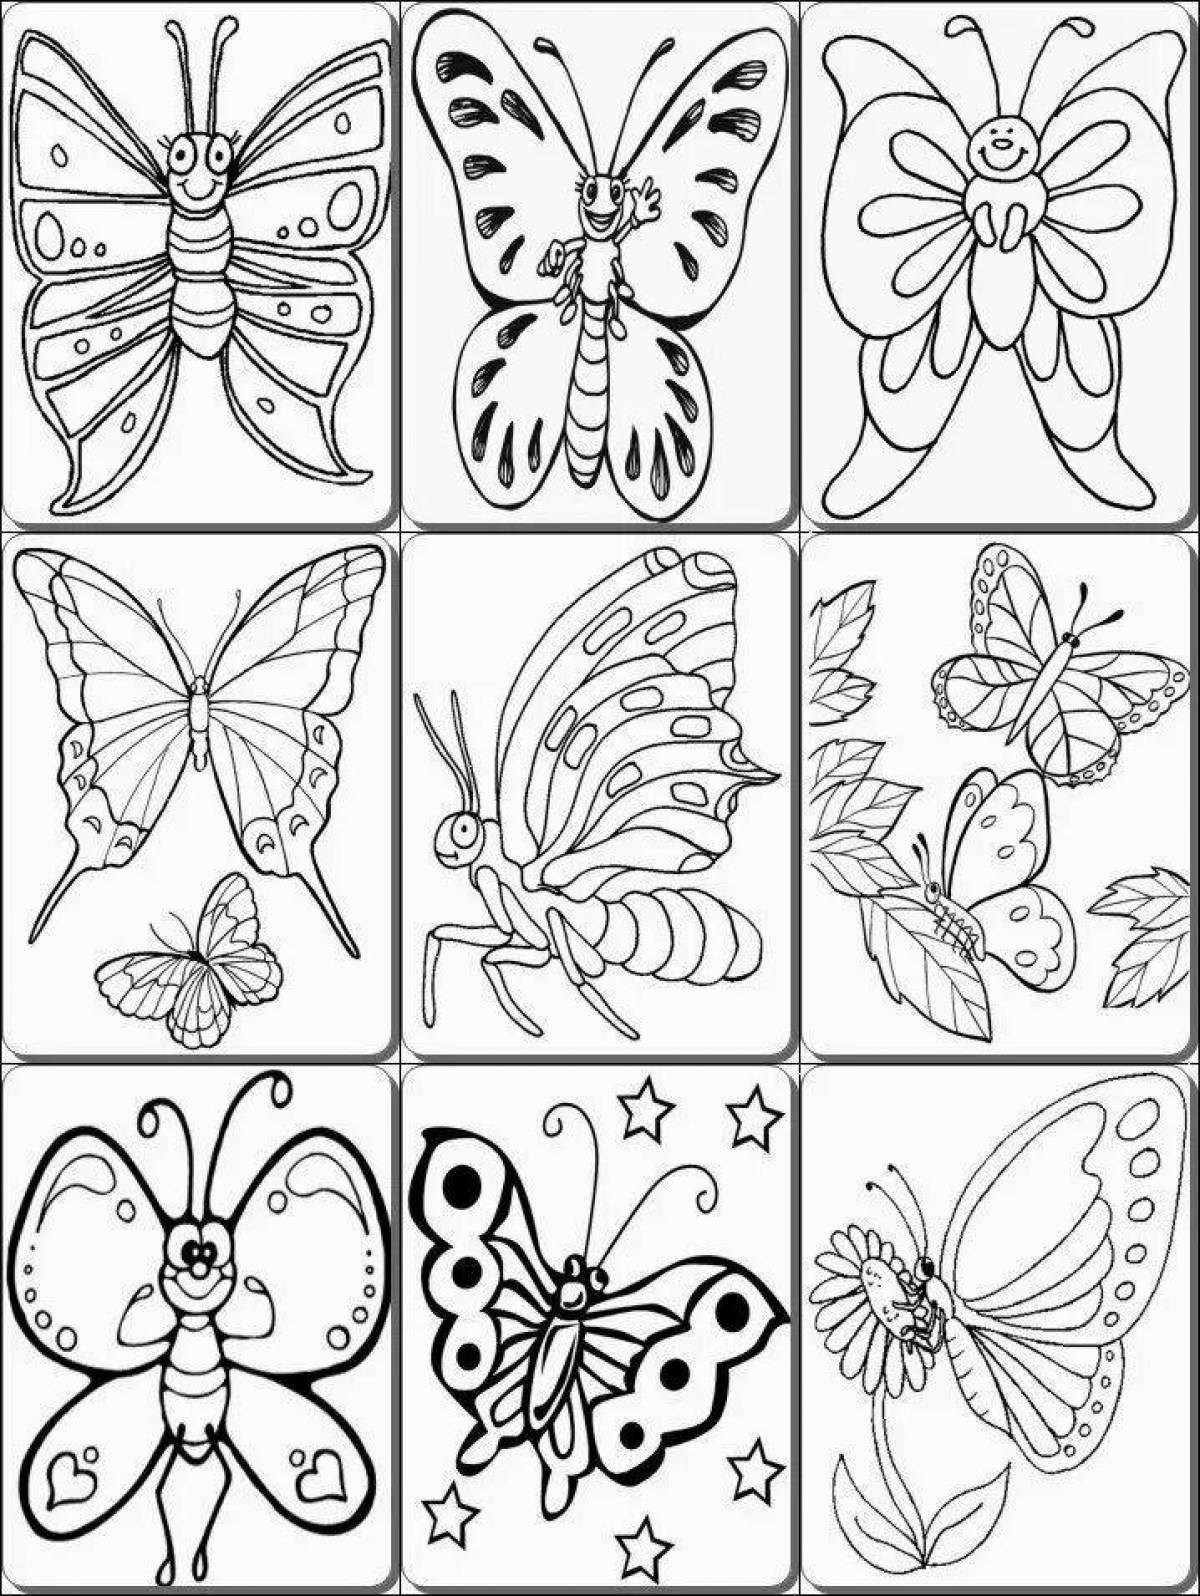 Lovely many butterflies on one sheet